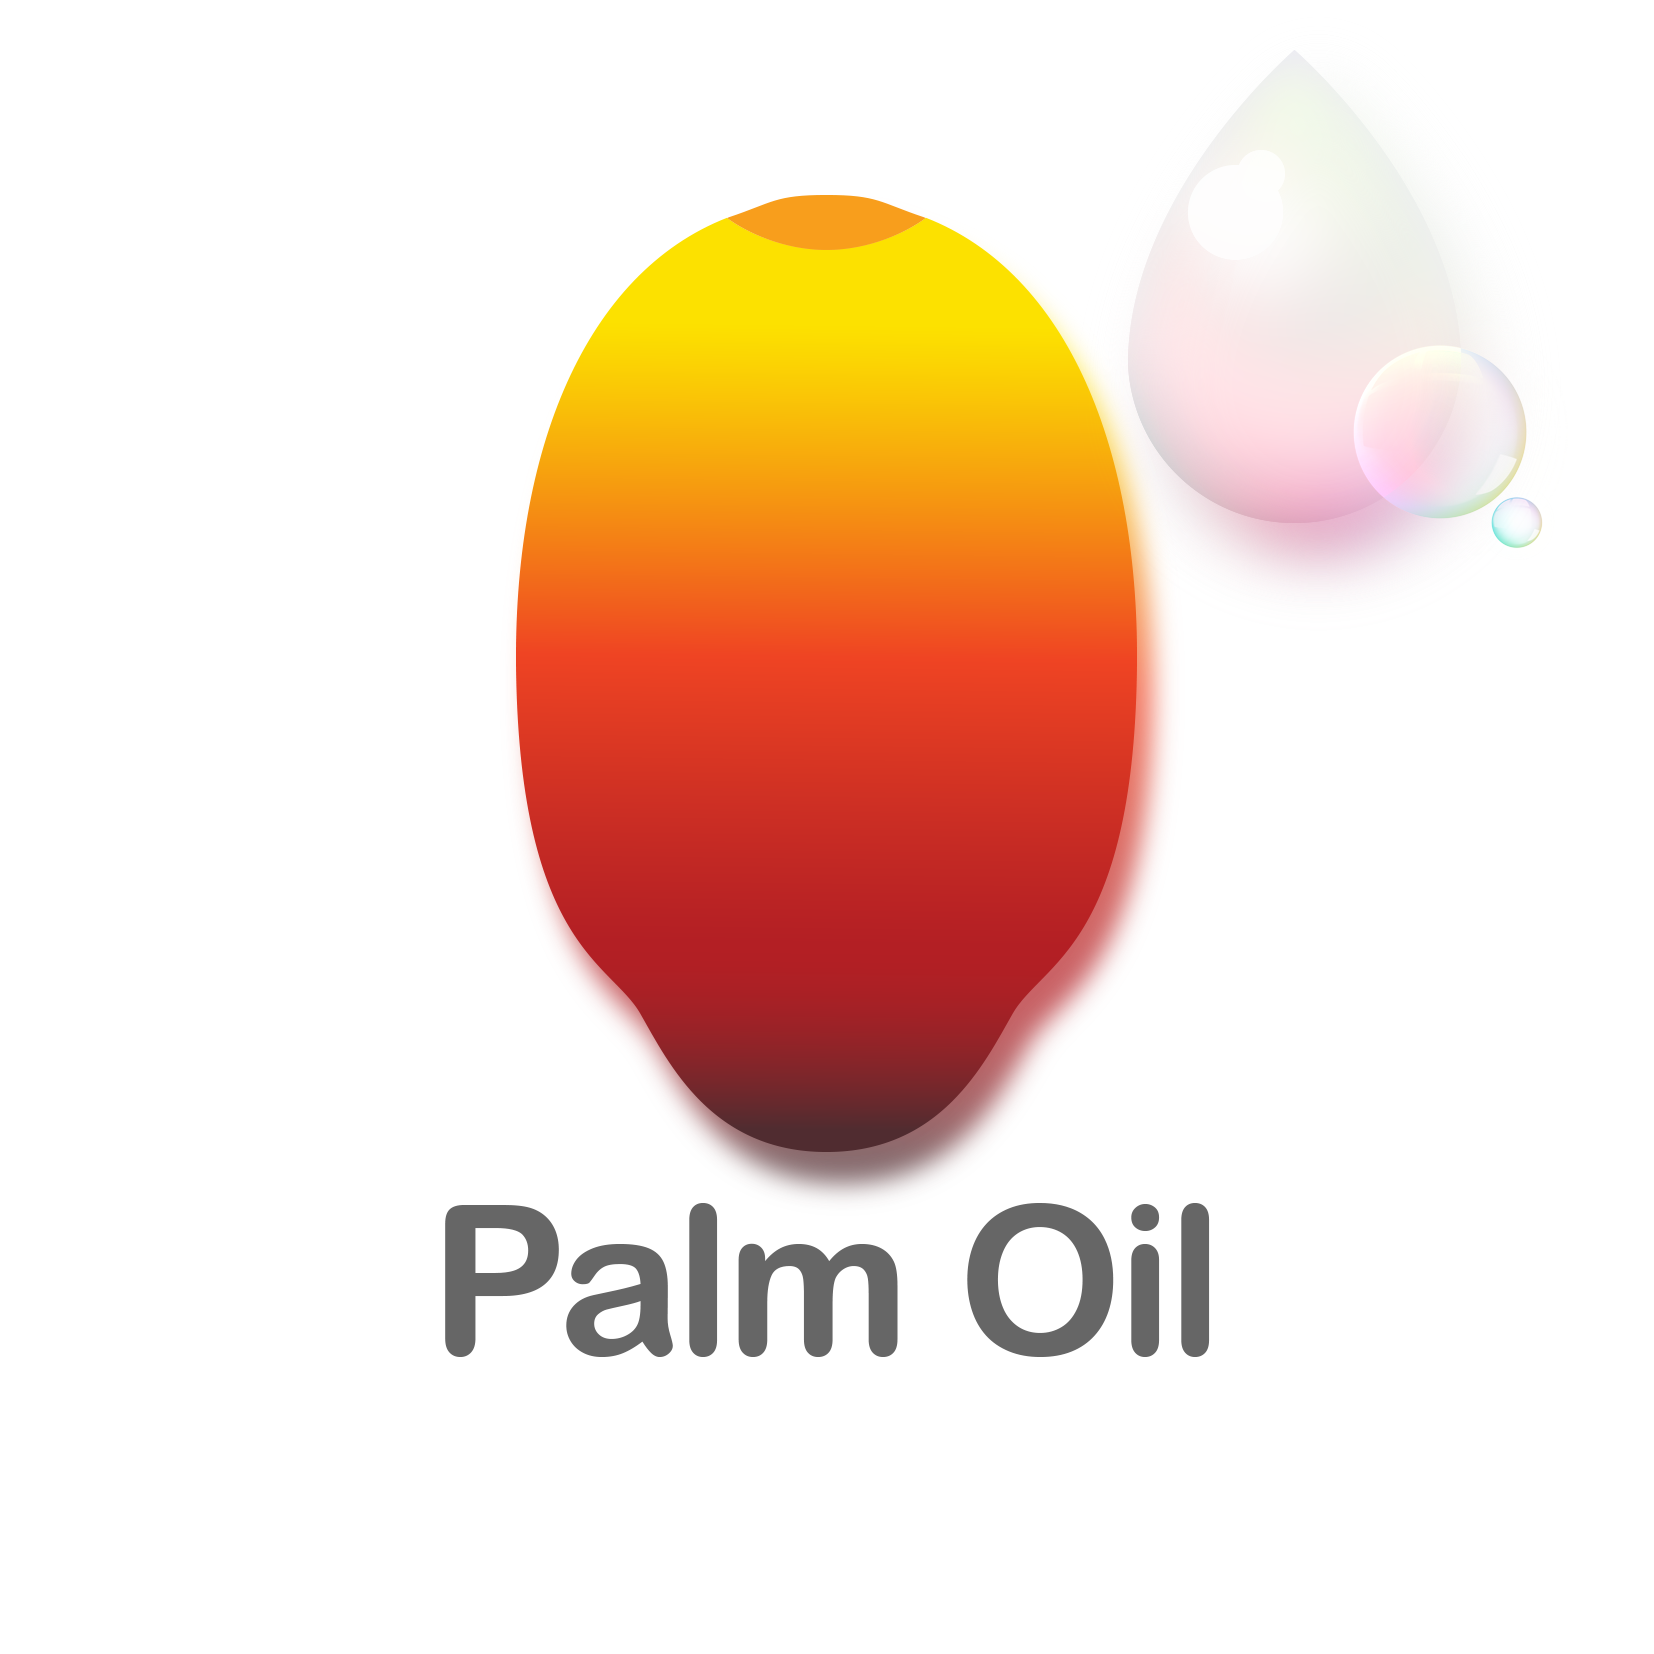 Palm Oil (Copy) (Copy)